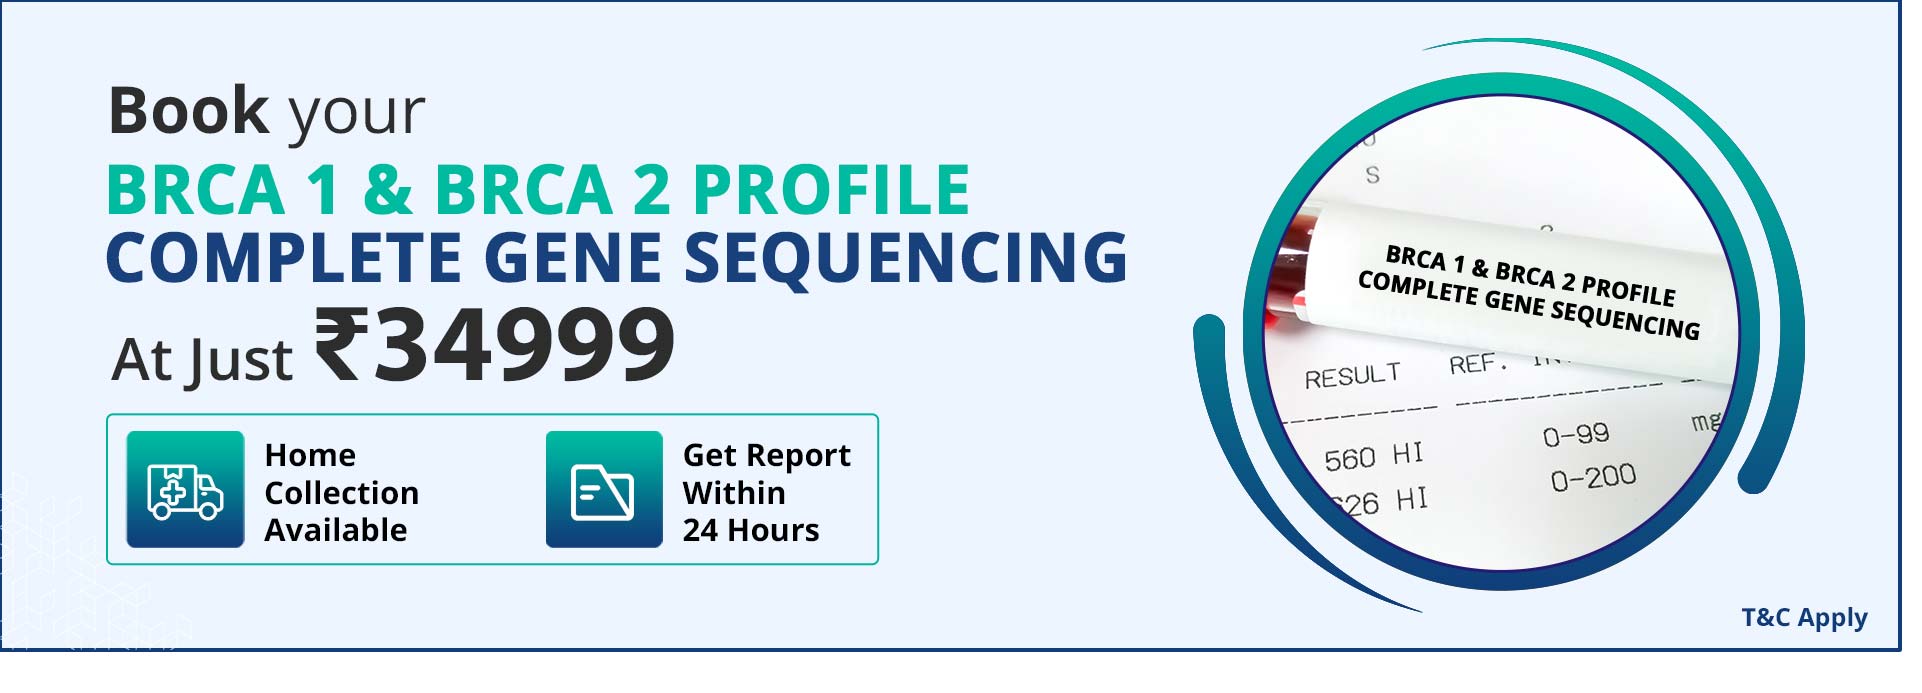 BRCA 1 & BRCA 2 Profile Complete Gene Sequencing